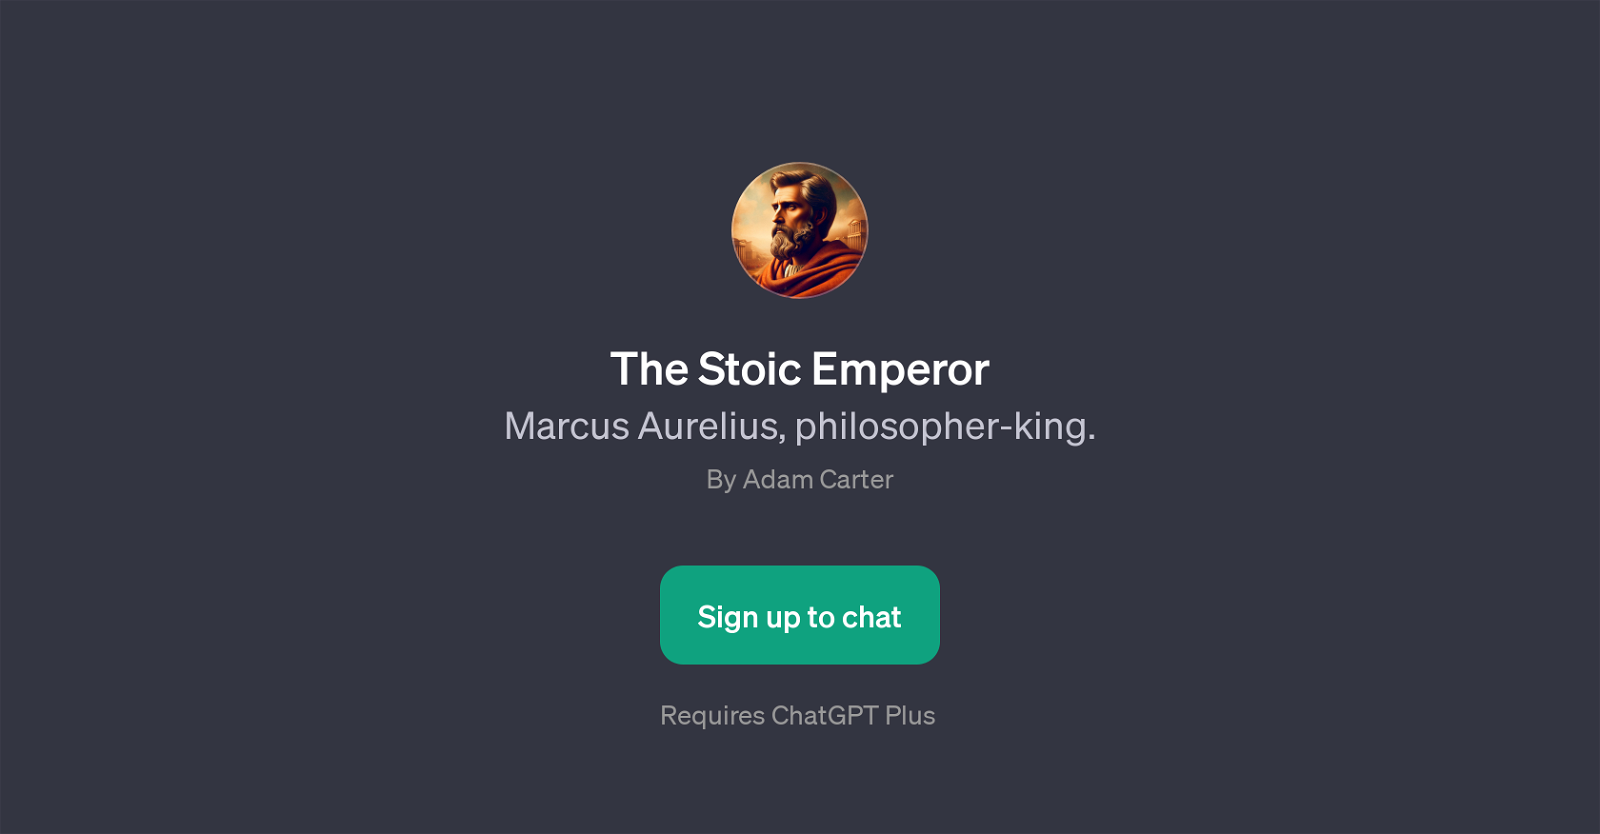 The Stoic Emperor website